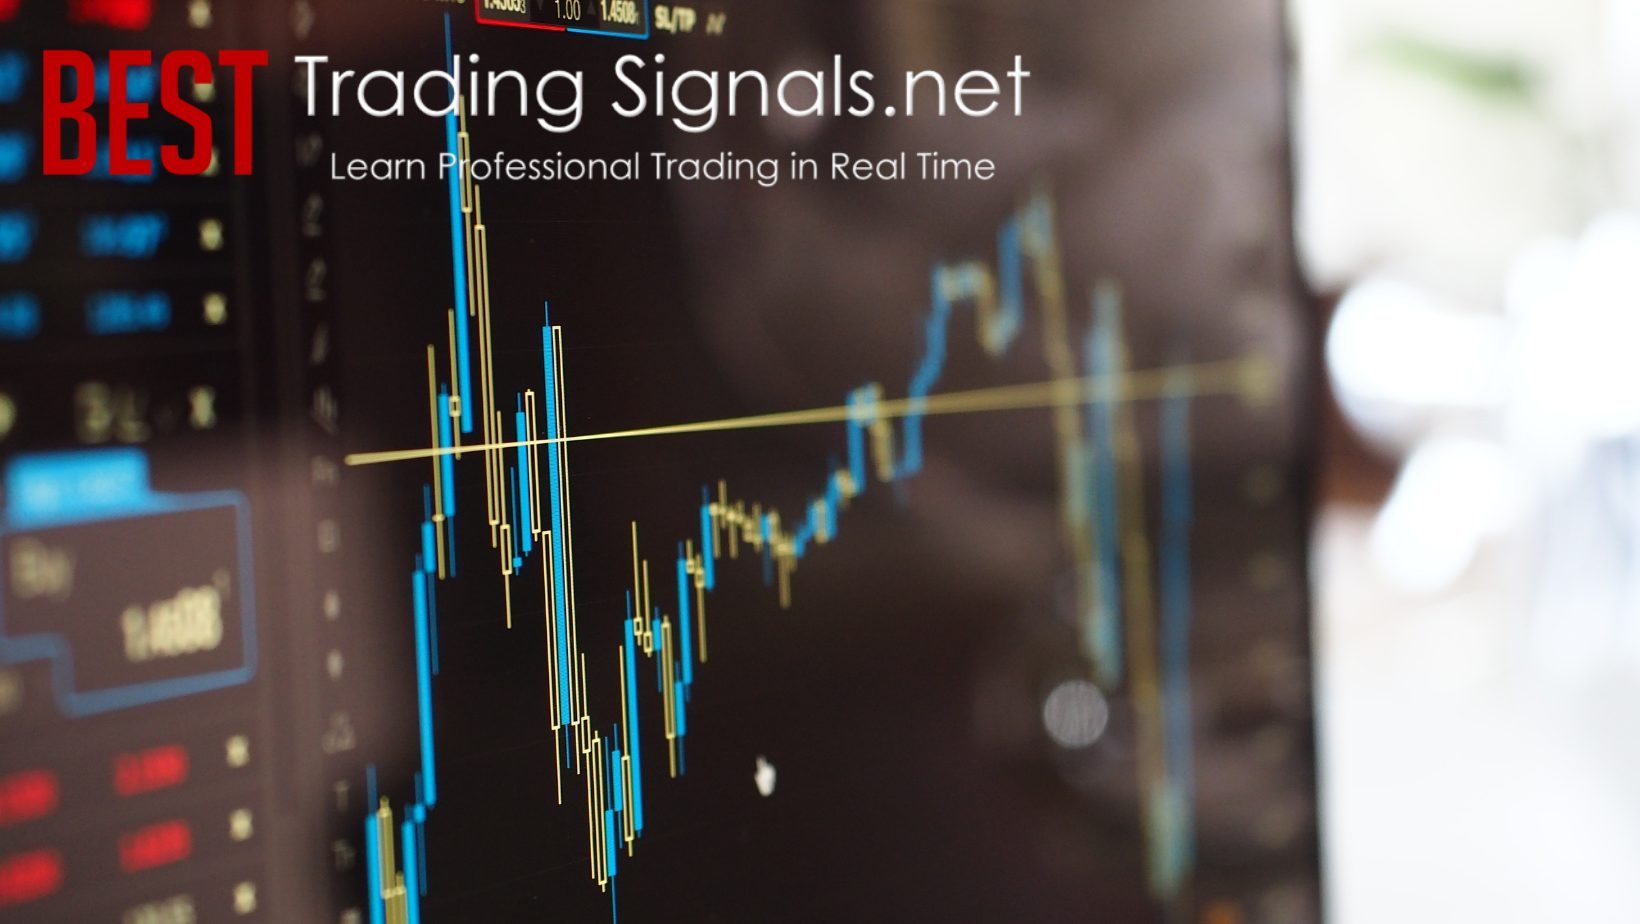 Option trading signal service